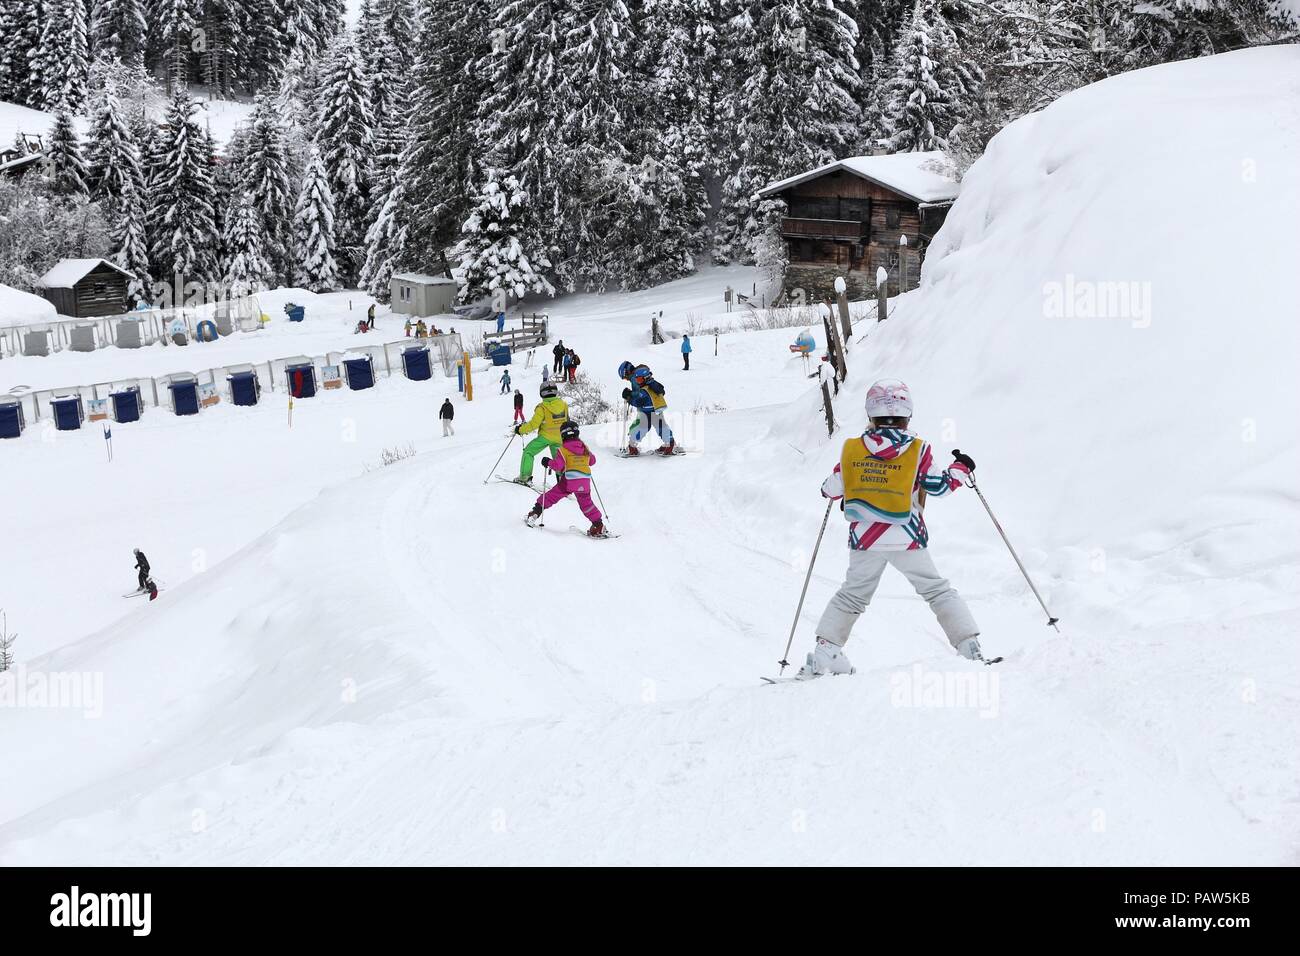 BAD HOFGASTEIN, AUSTRIA - MARCH 7, 2016: Children learn at skiing school in Bad Hofgastein. It is part of Ski Amade, one of largest ski regions in Eur Stock Photo